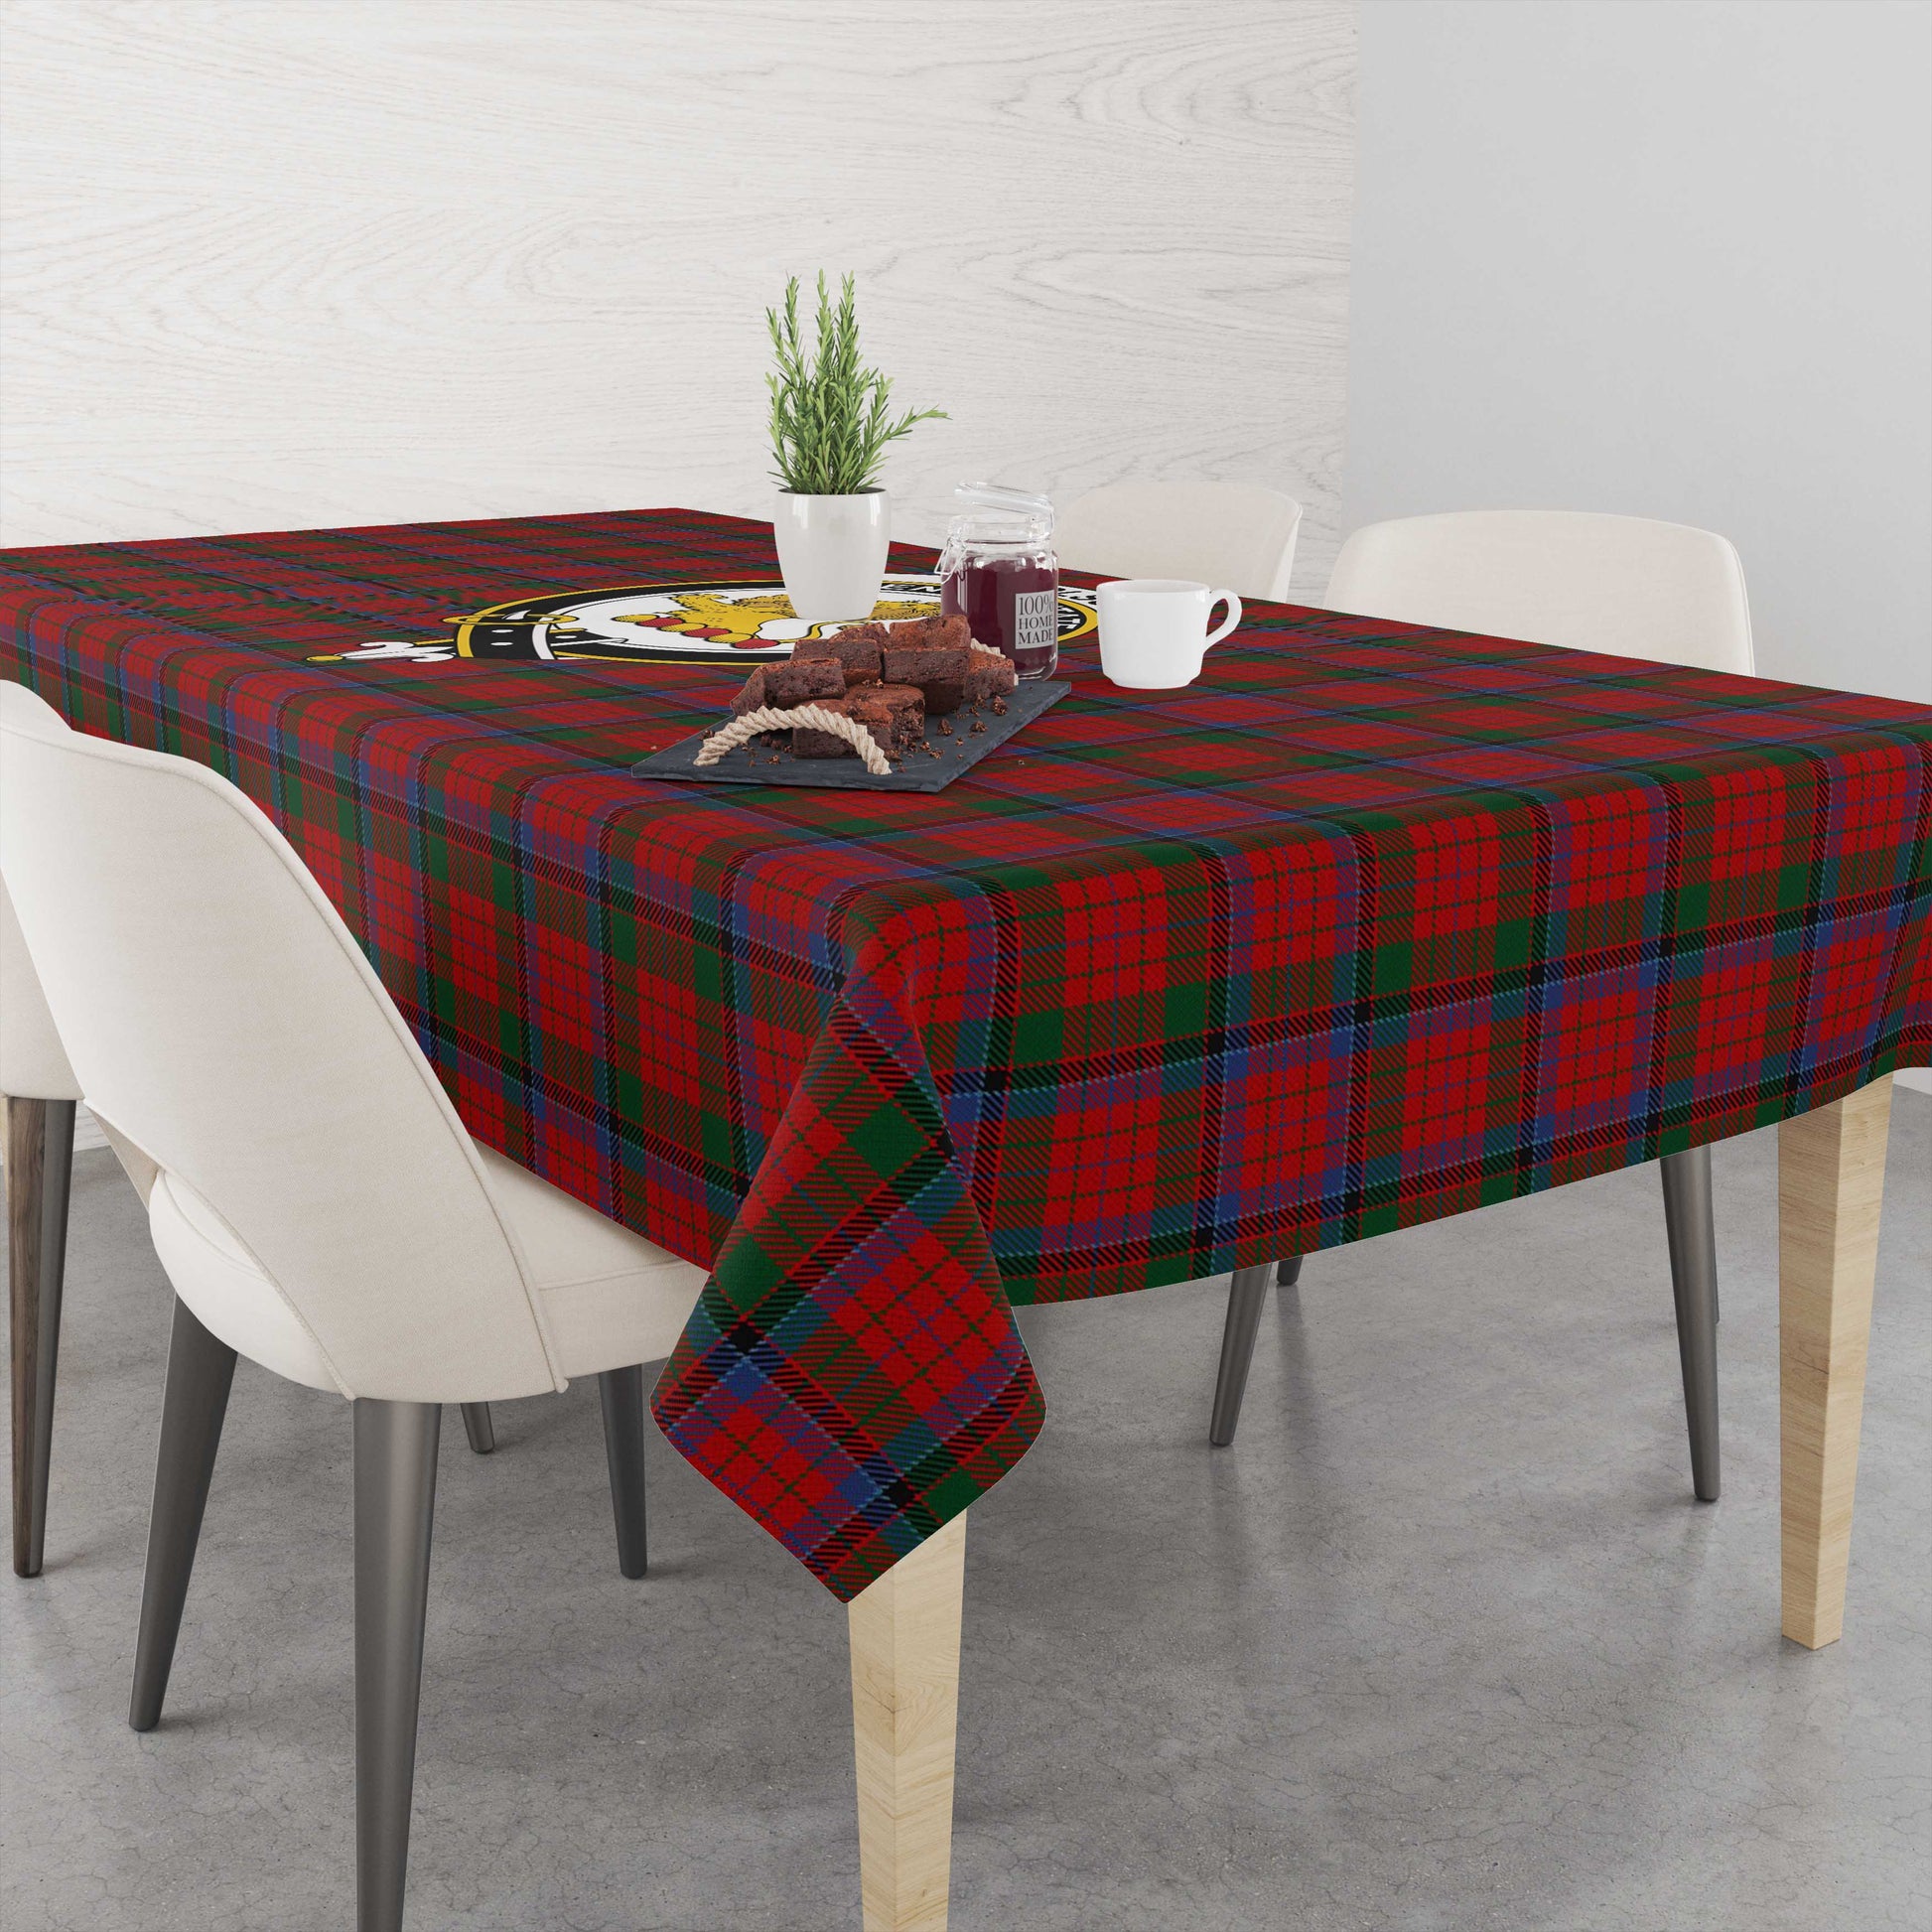 nicolson-tatan-tablecloth-with-family-crest